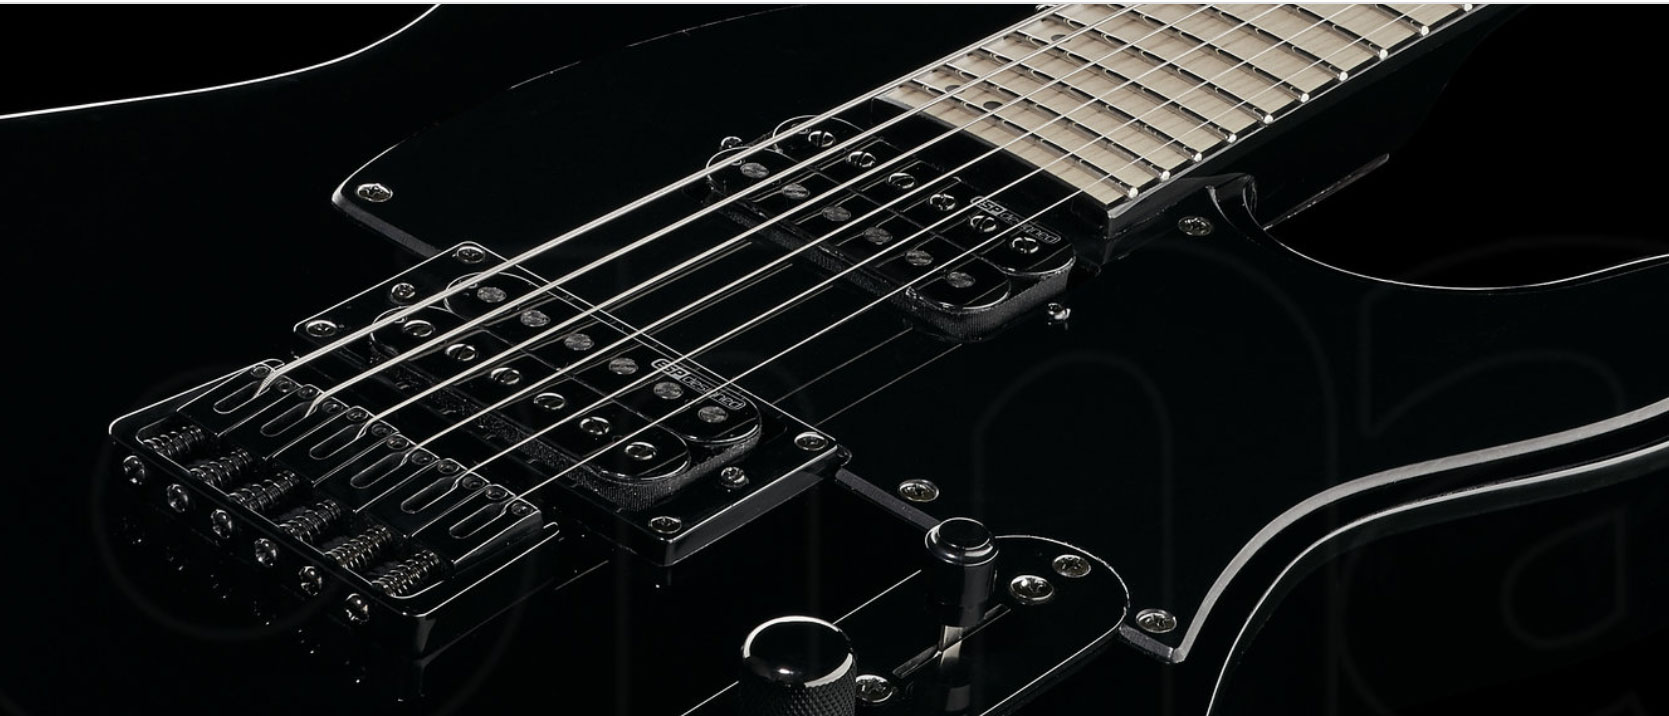 Ltd Te-200m Hh Ht Mn - Black - Guitarra eléctrica con forma de tel - Variation 2